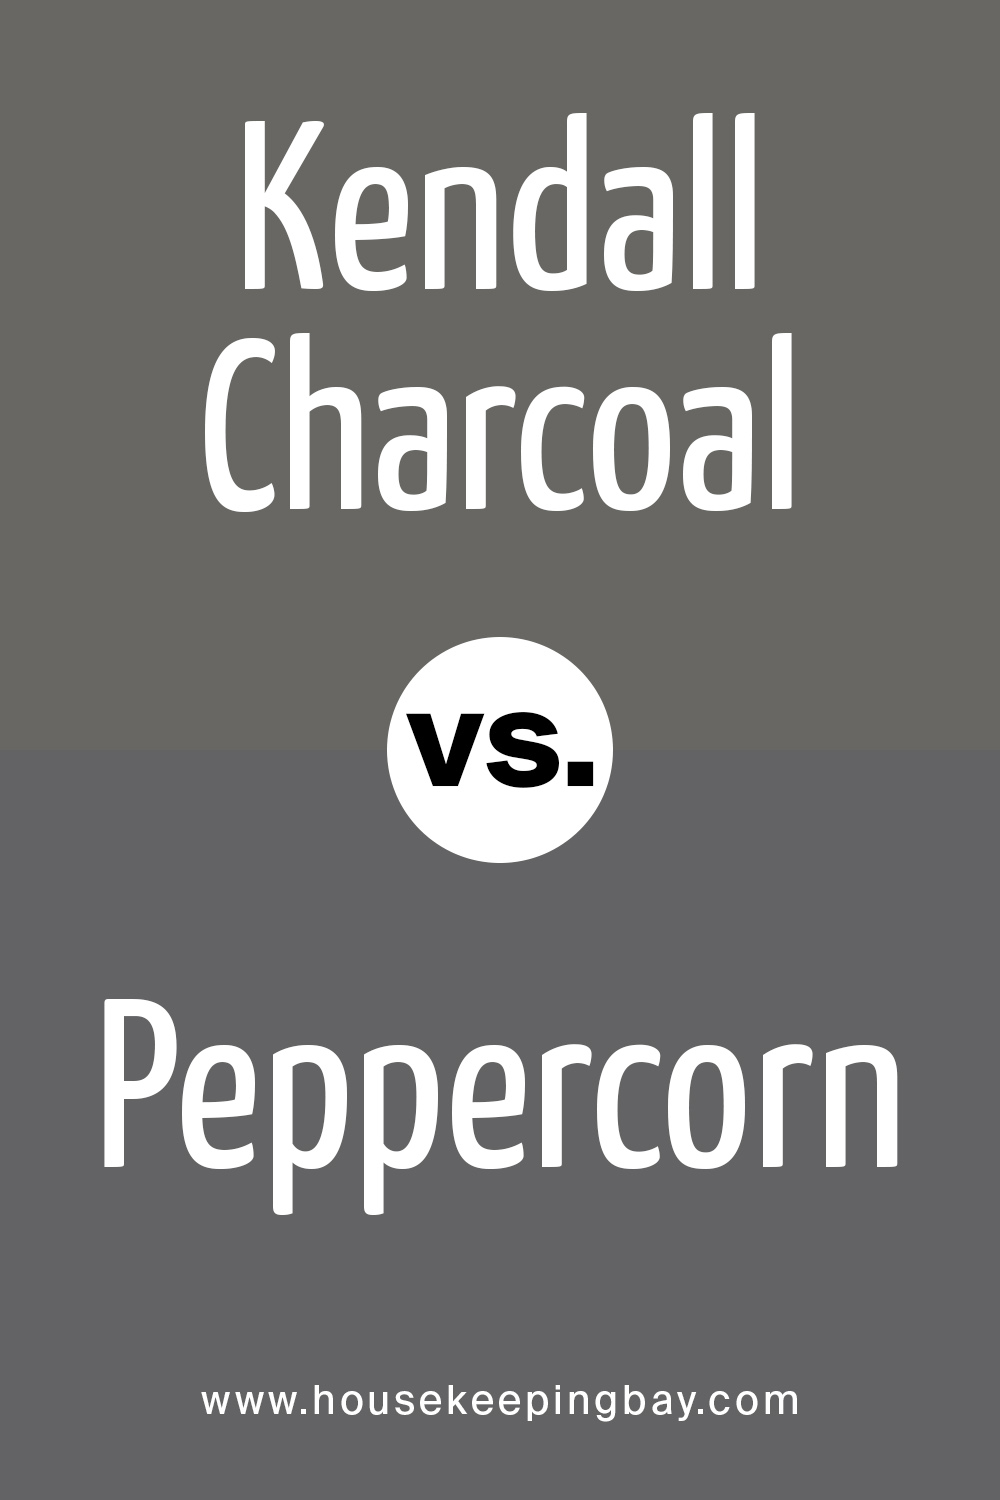 Kendall Charcoal vs Peppercorn